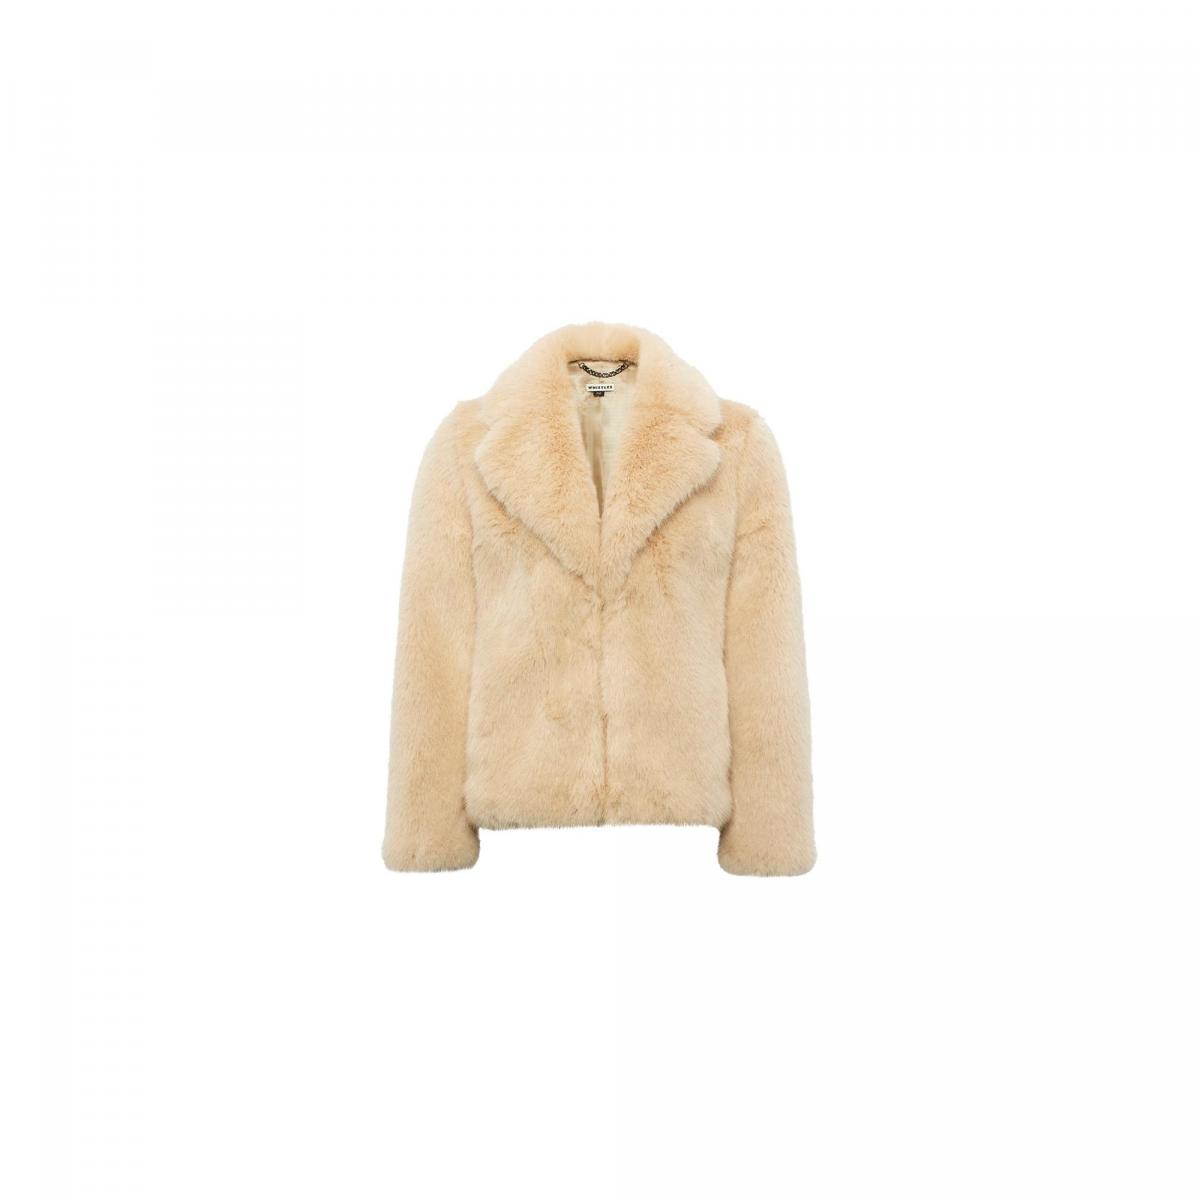 Whistles in John Lewis, Kumiko short faux fur coat in neutral, £275